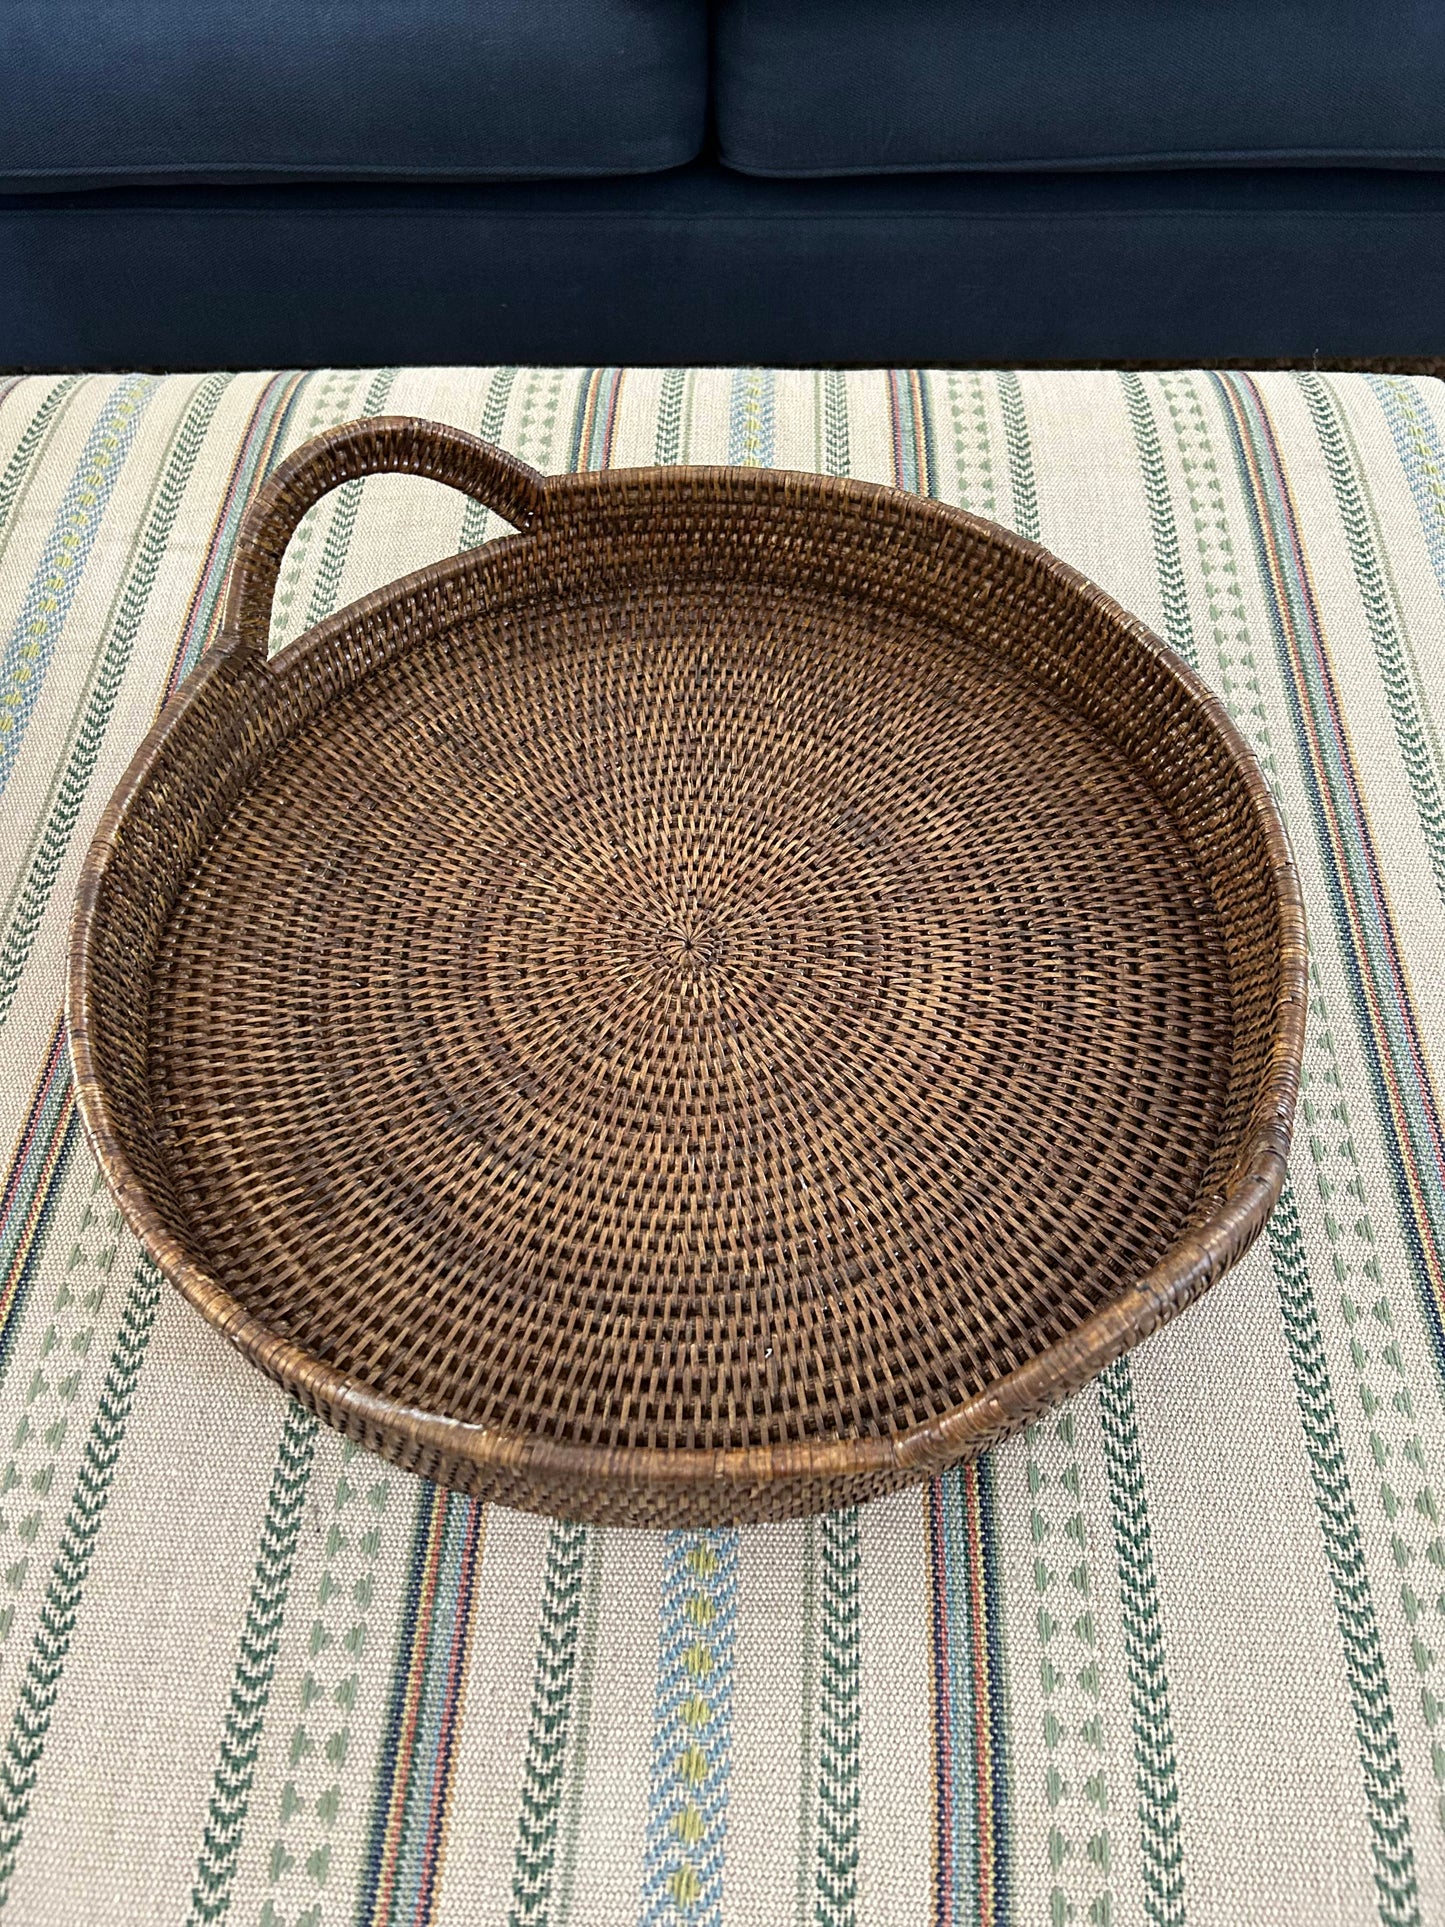 Rattan round tray with handles - medium